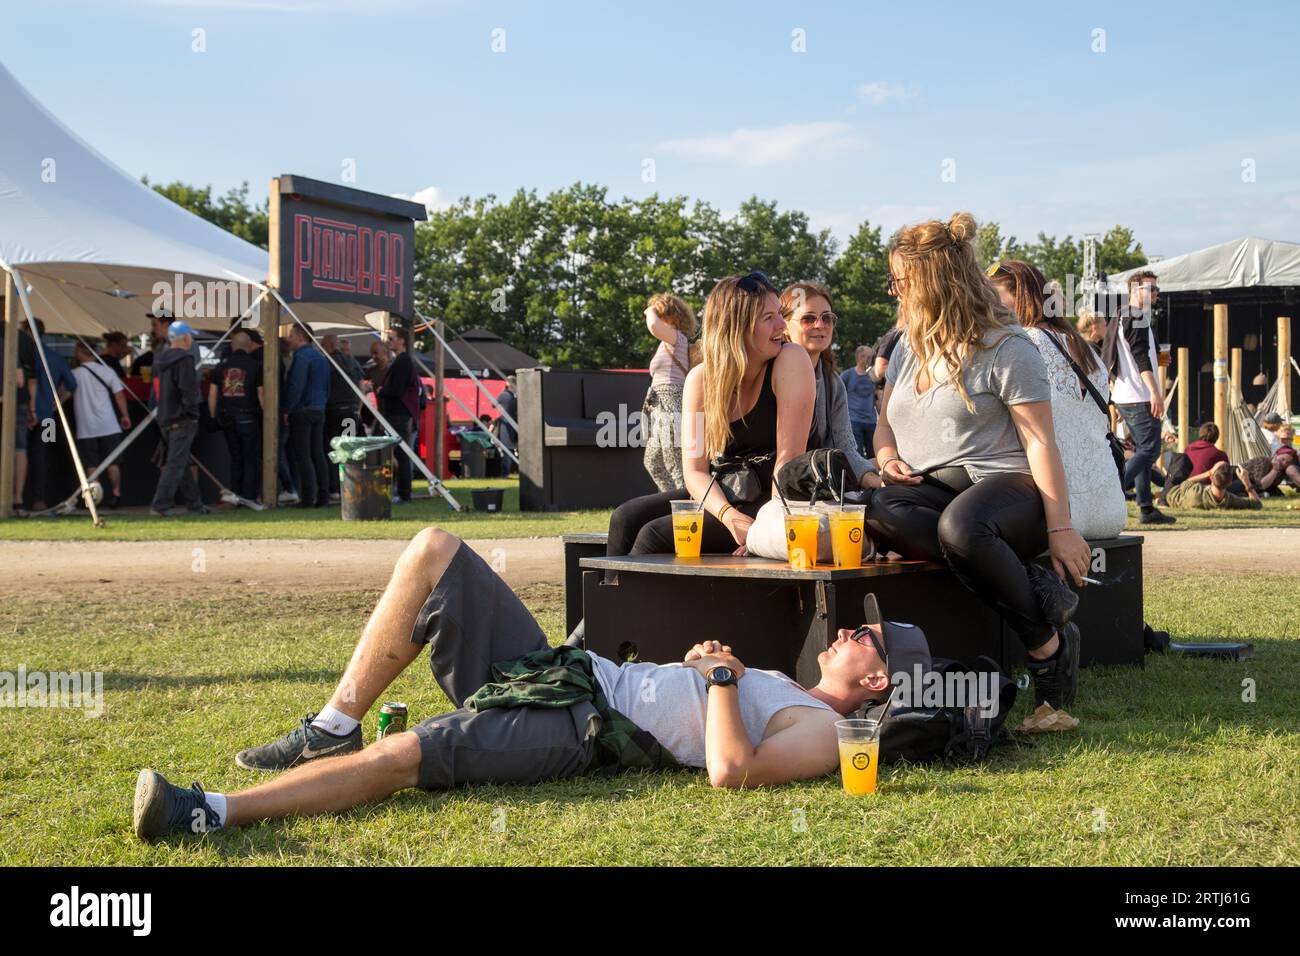 Roskilde, Danemark, 29 juin 2016 : des gens parlent et profitent du soleil dans un bar du festival de Roskilde Banque D'Images